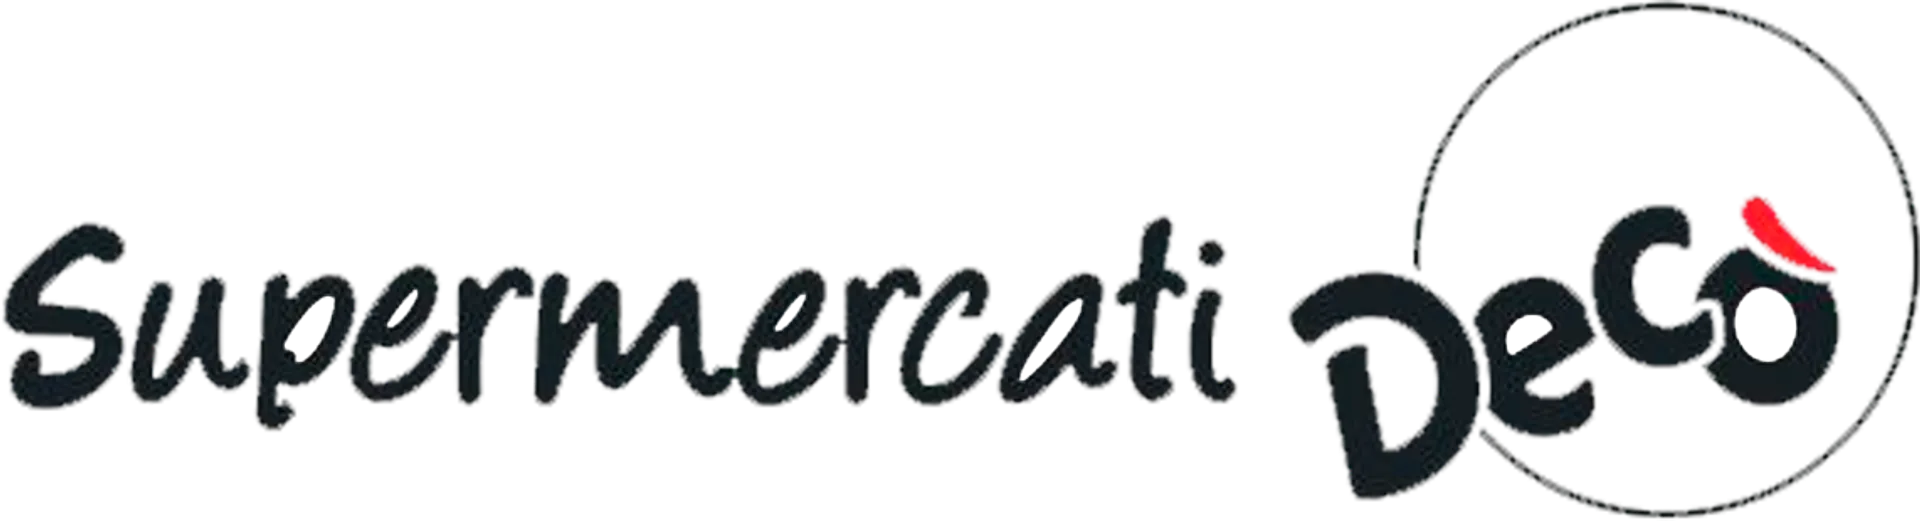 DECO SUPERMERCATI logo